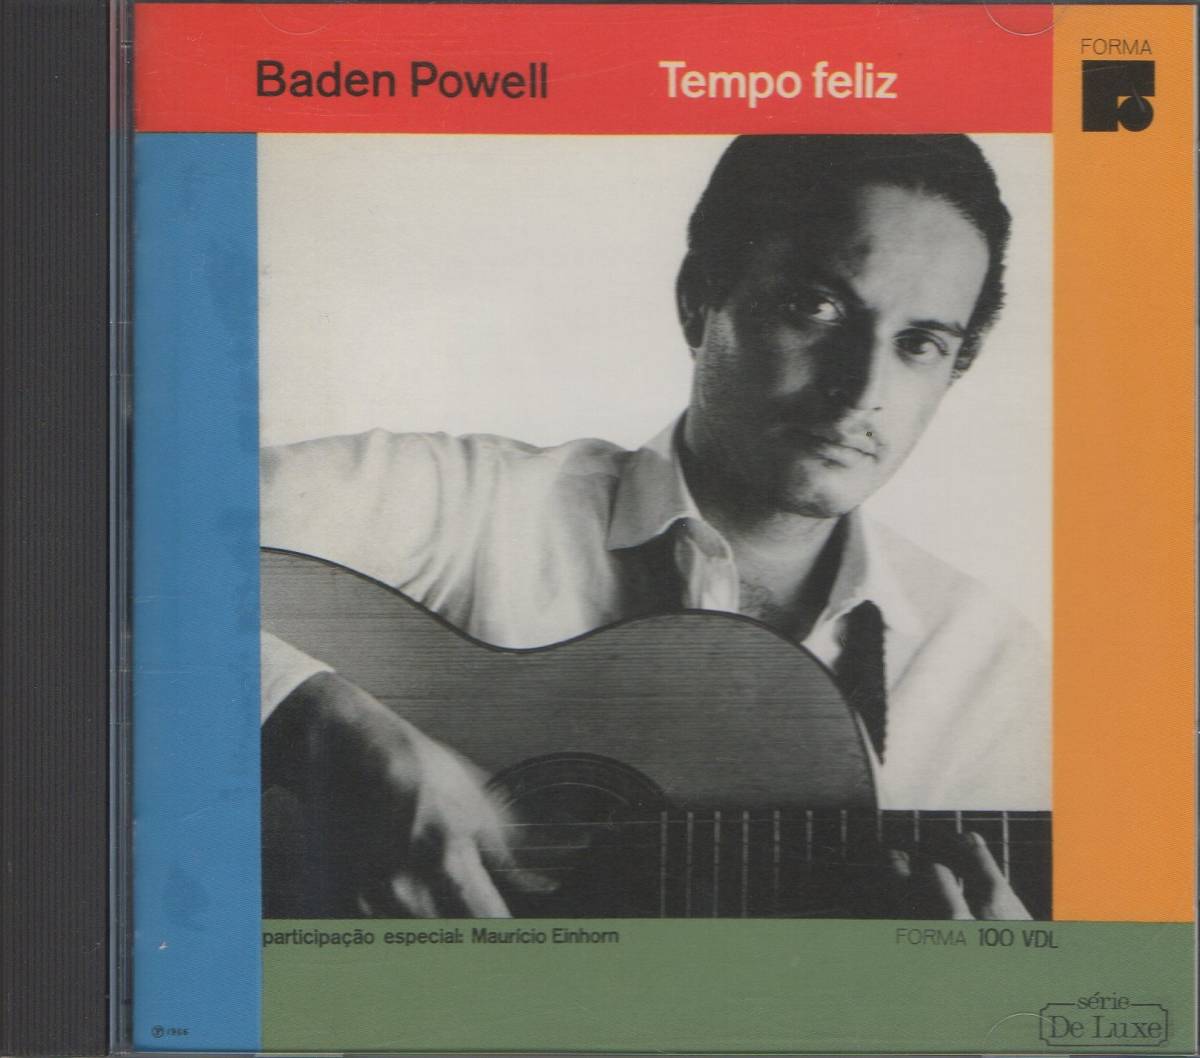 【CD】BADEN POWELL - TEMPO FELIZ (バーデン・パウエル - テンポ・フェリス)の画像1